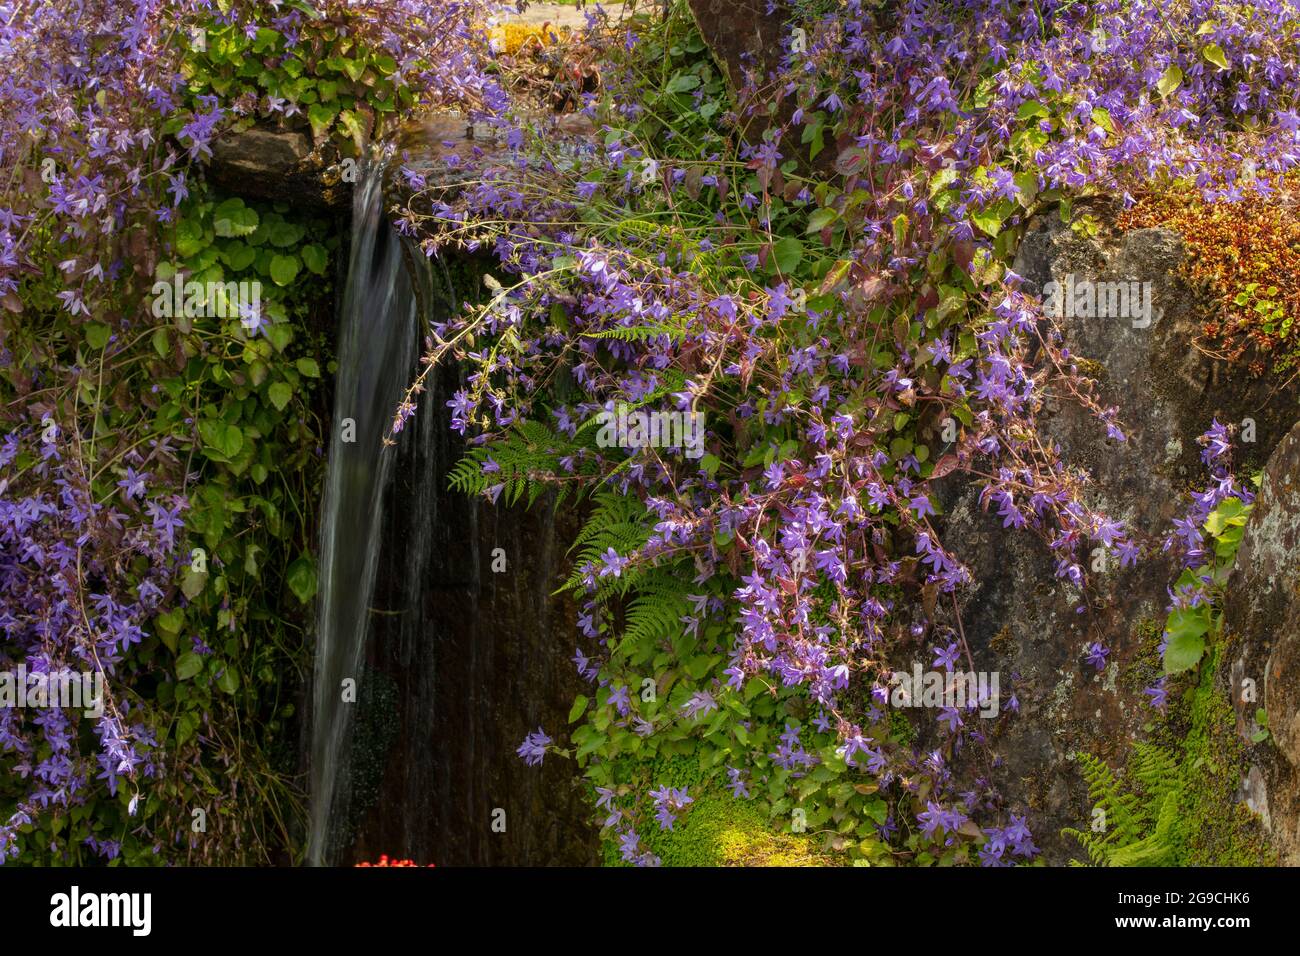 Campanula Poscharskyana, trailing bellflower, surrounding a small waterfall in a garden setting Stock Photo